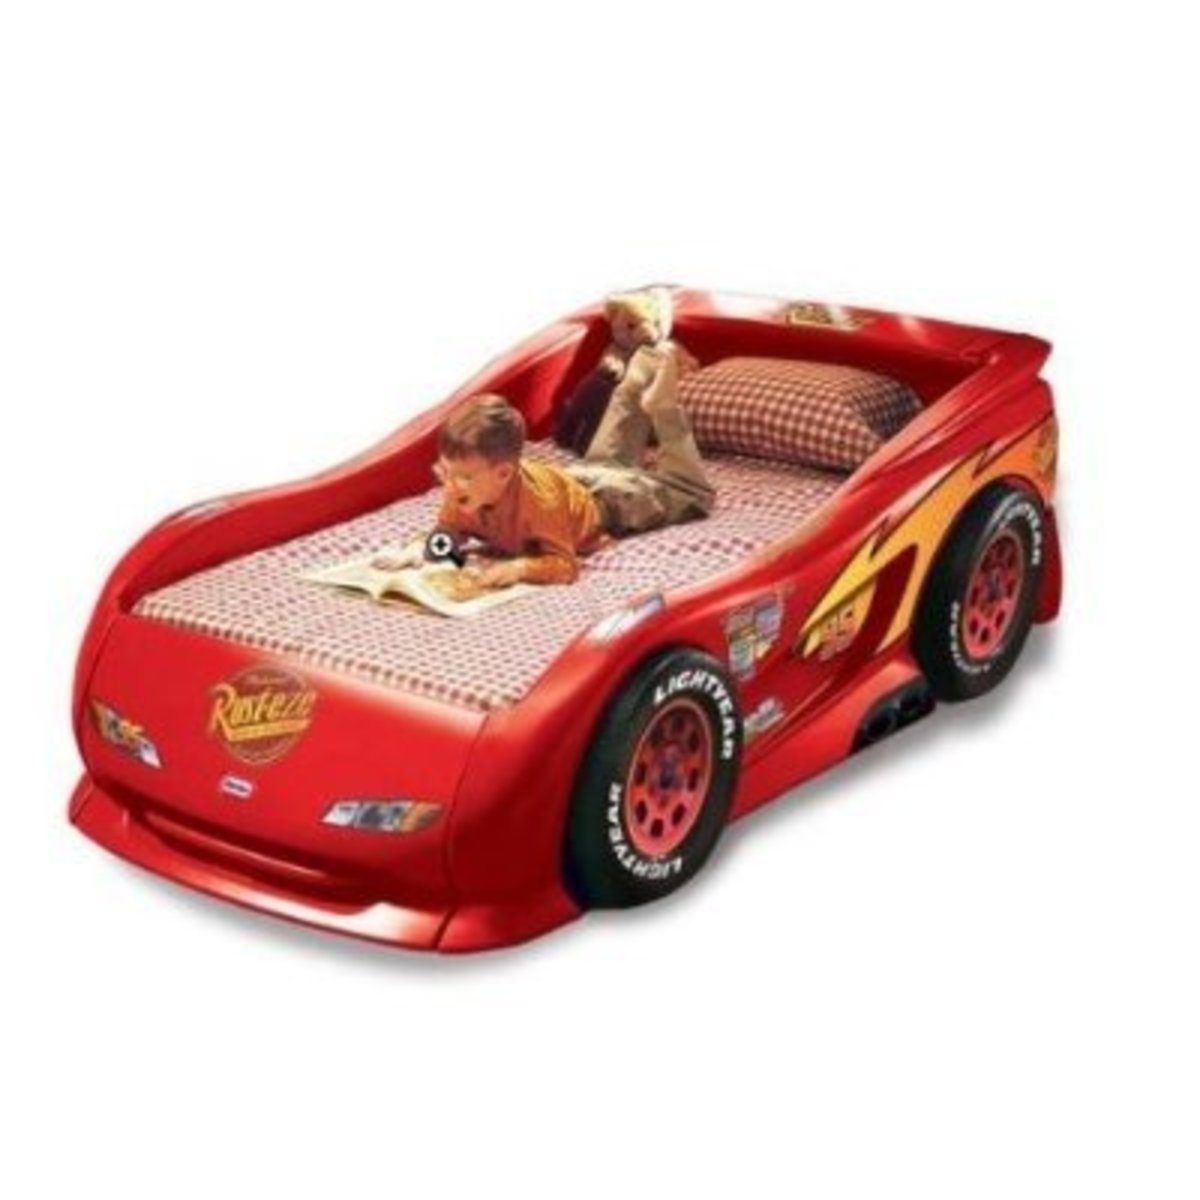 Little Tikes Race Car Bed A Er S, Disney Cars Lightning Mcqueen Twin Bed